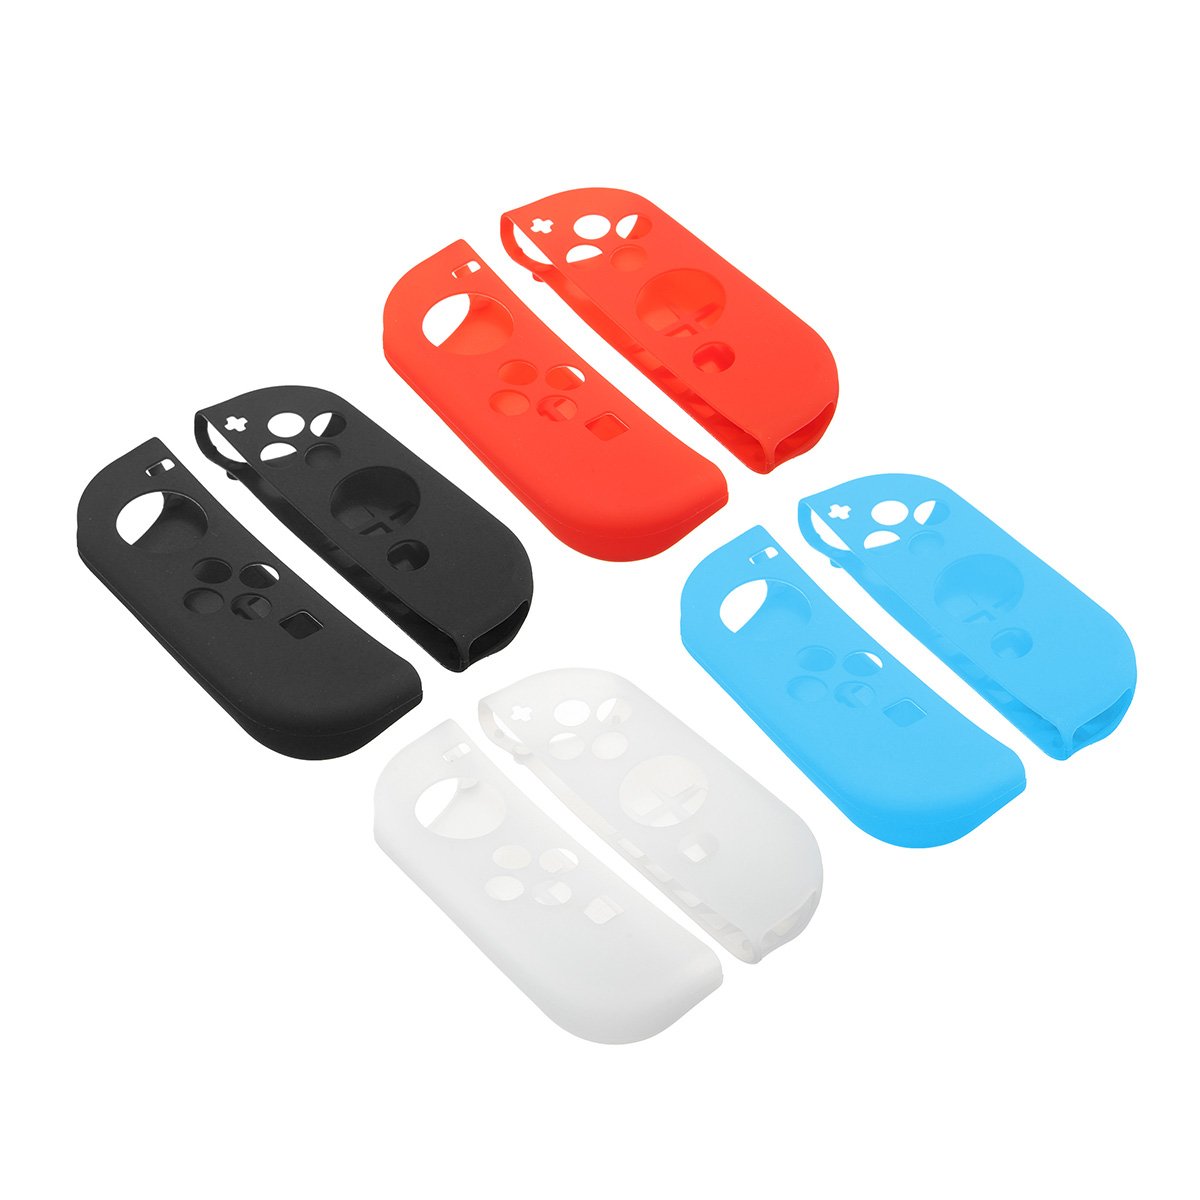 Silicon Case Protective Impact Resistant Rubber Skin Cover For Nintendo Switch Joy-Con Controller 2